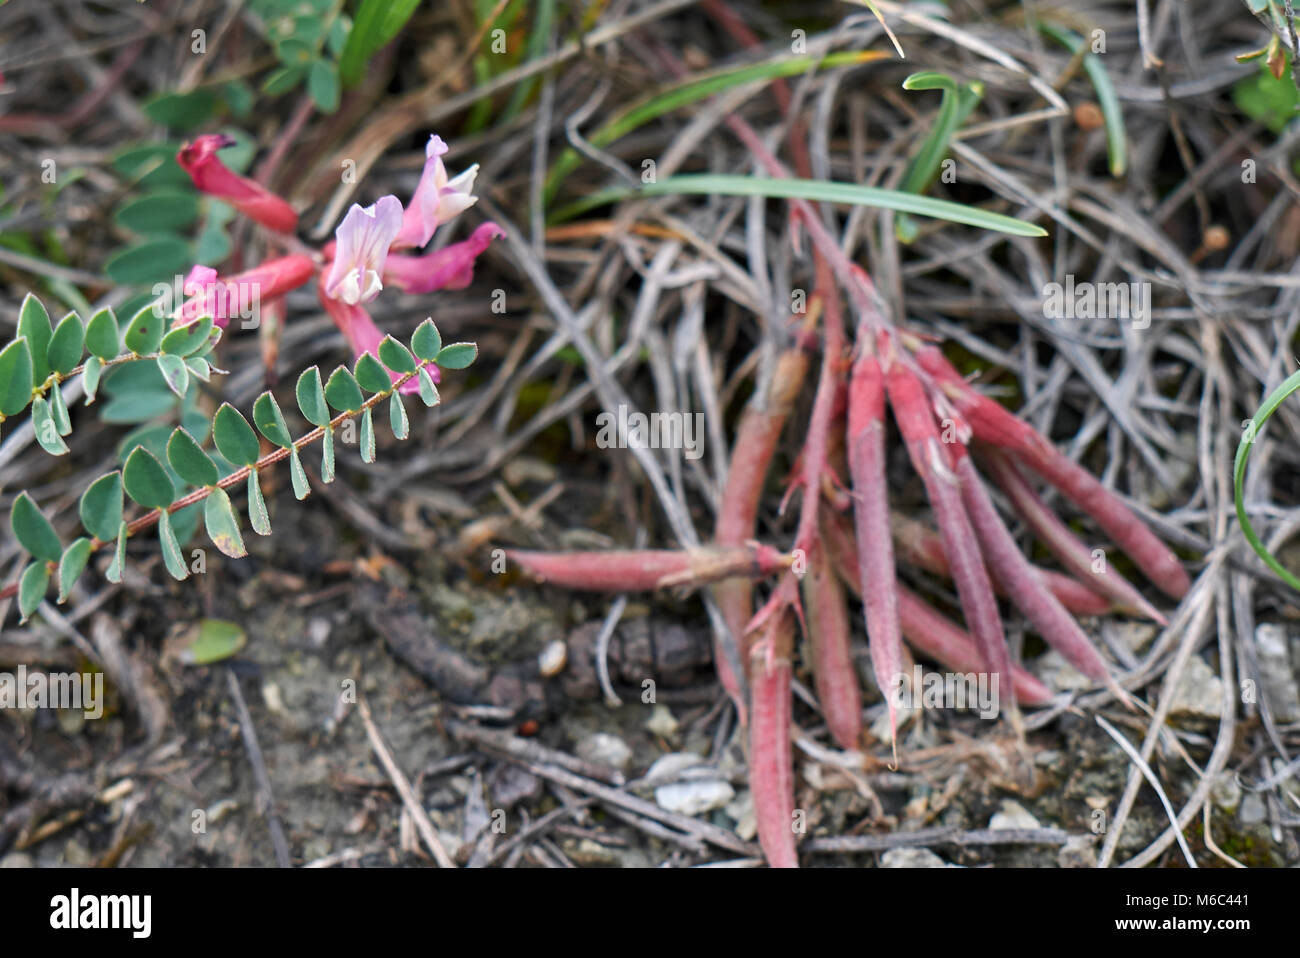 Astragalus monspessulanus fruits and flowers Stock Photo